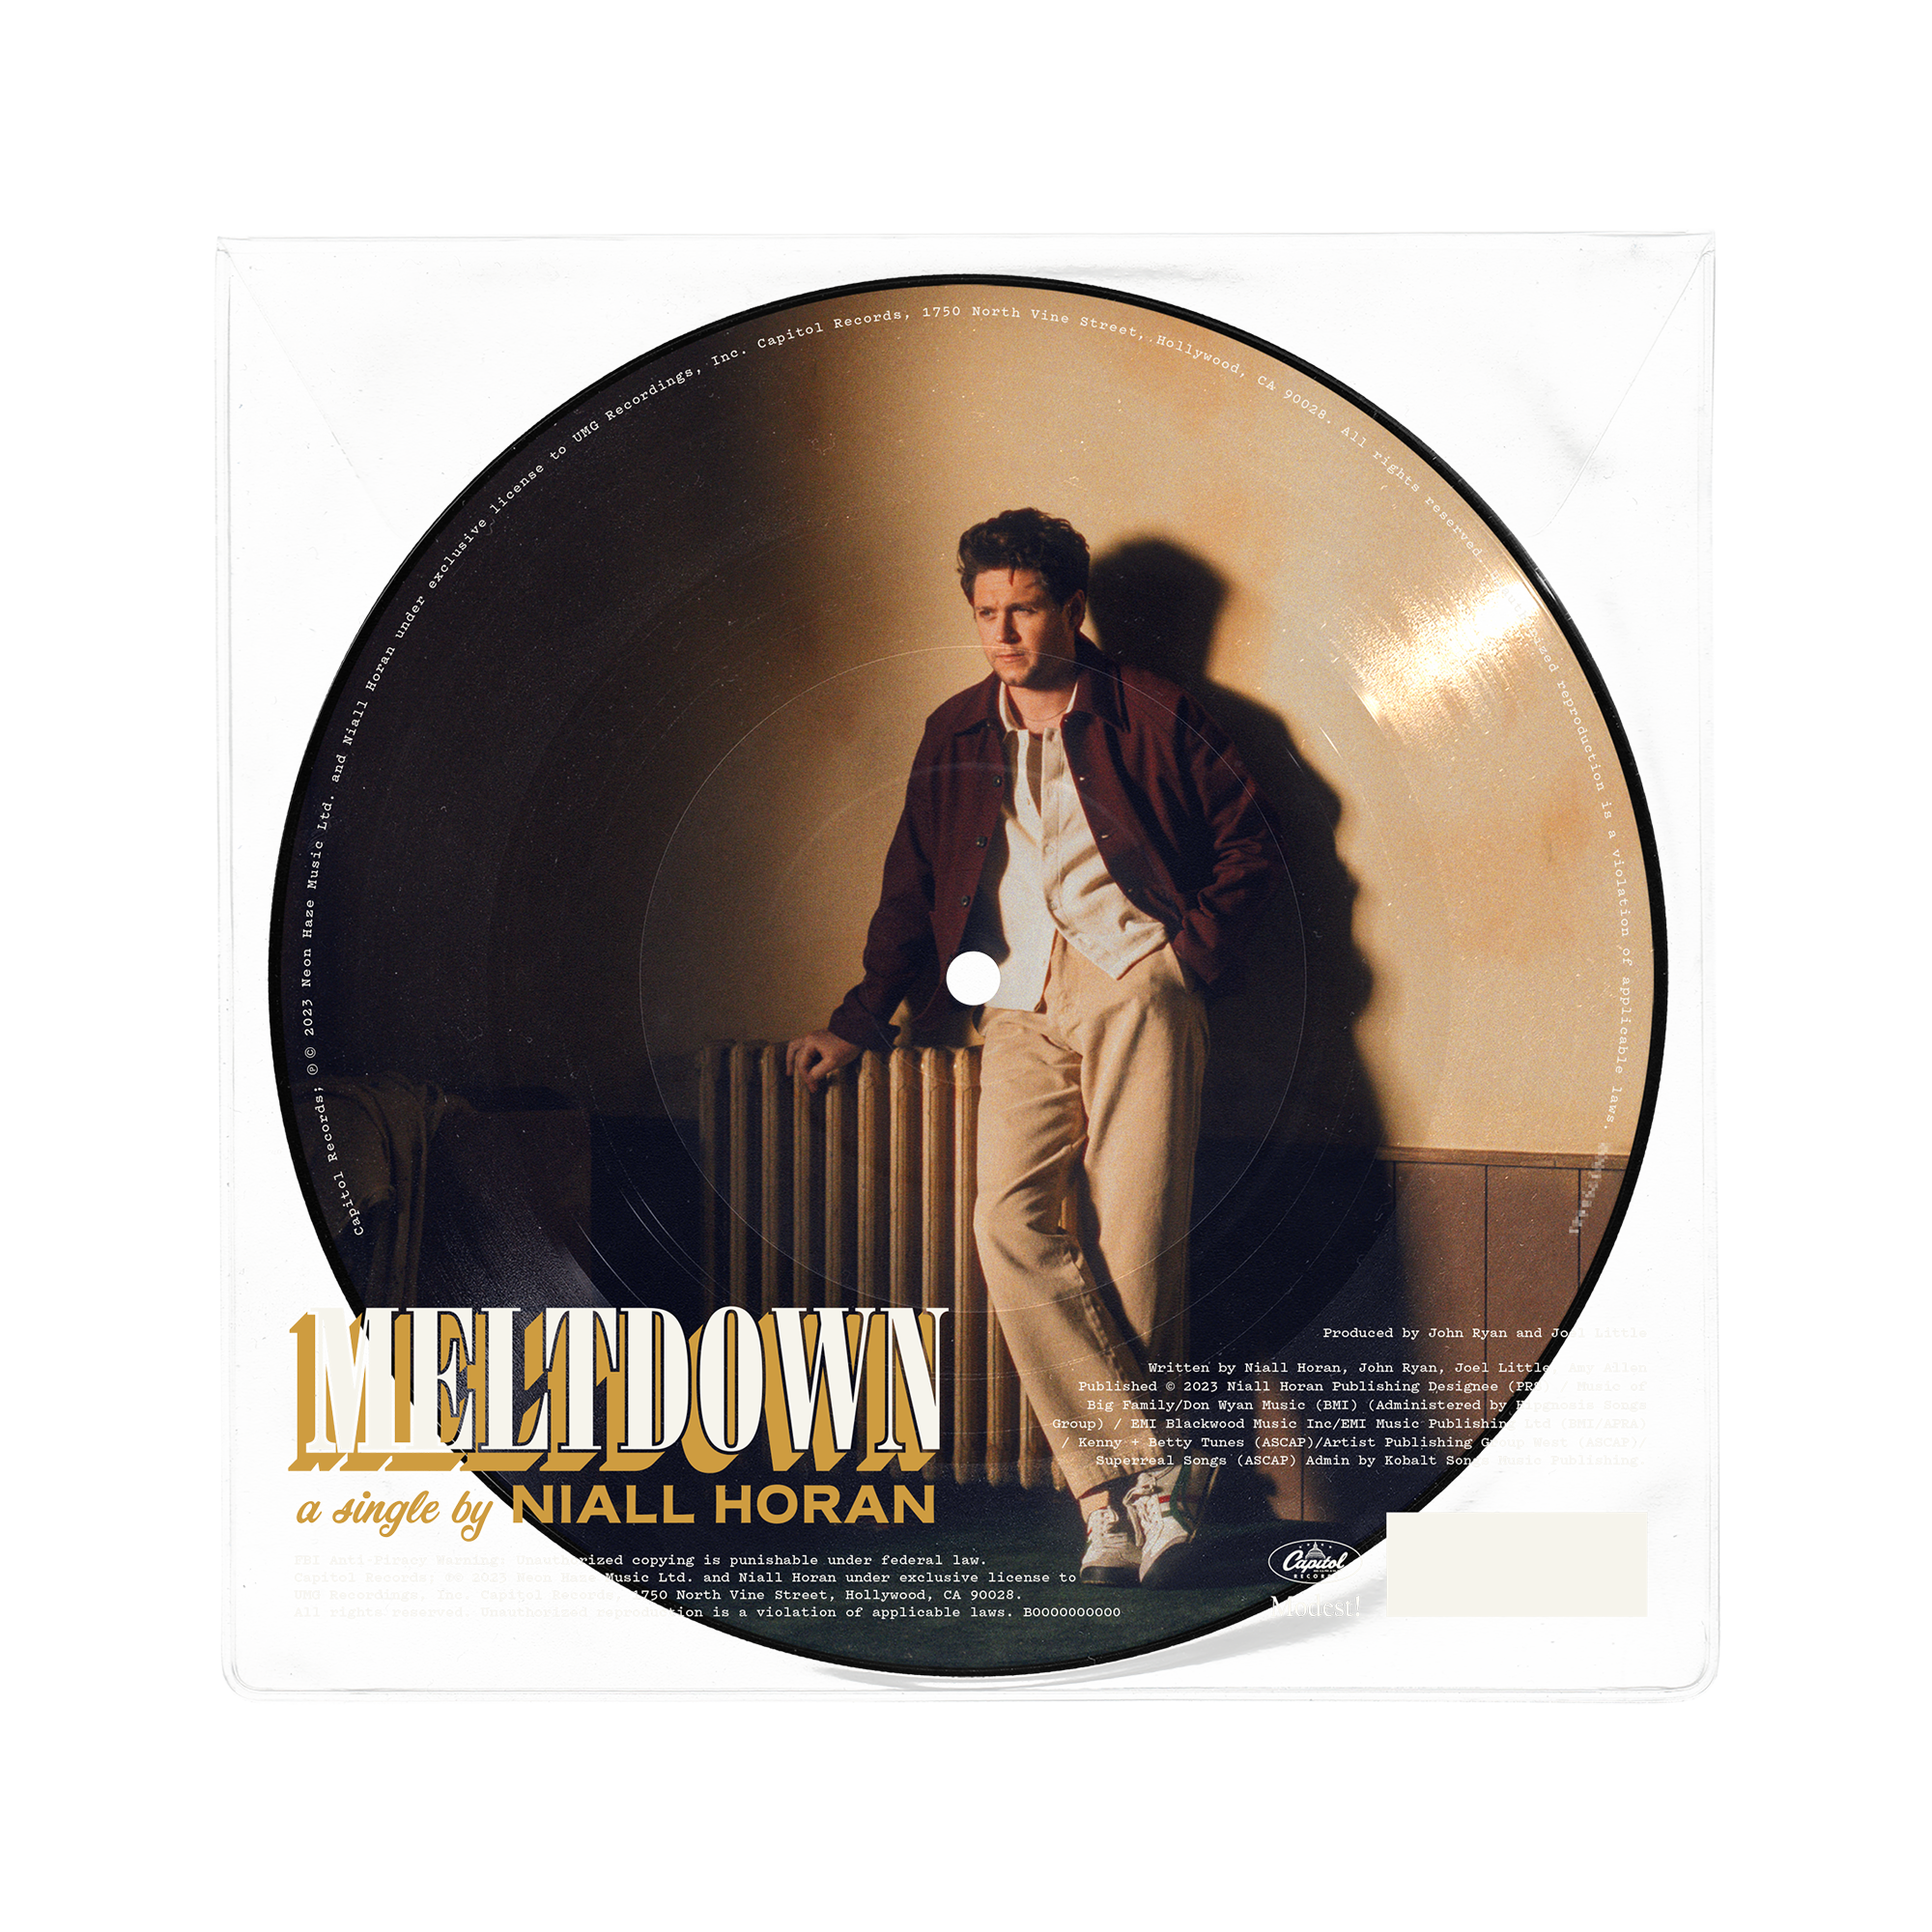 Niall Horan - Meltdown 7" Single